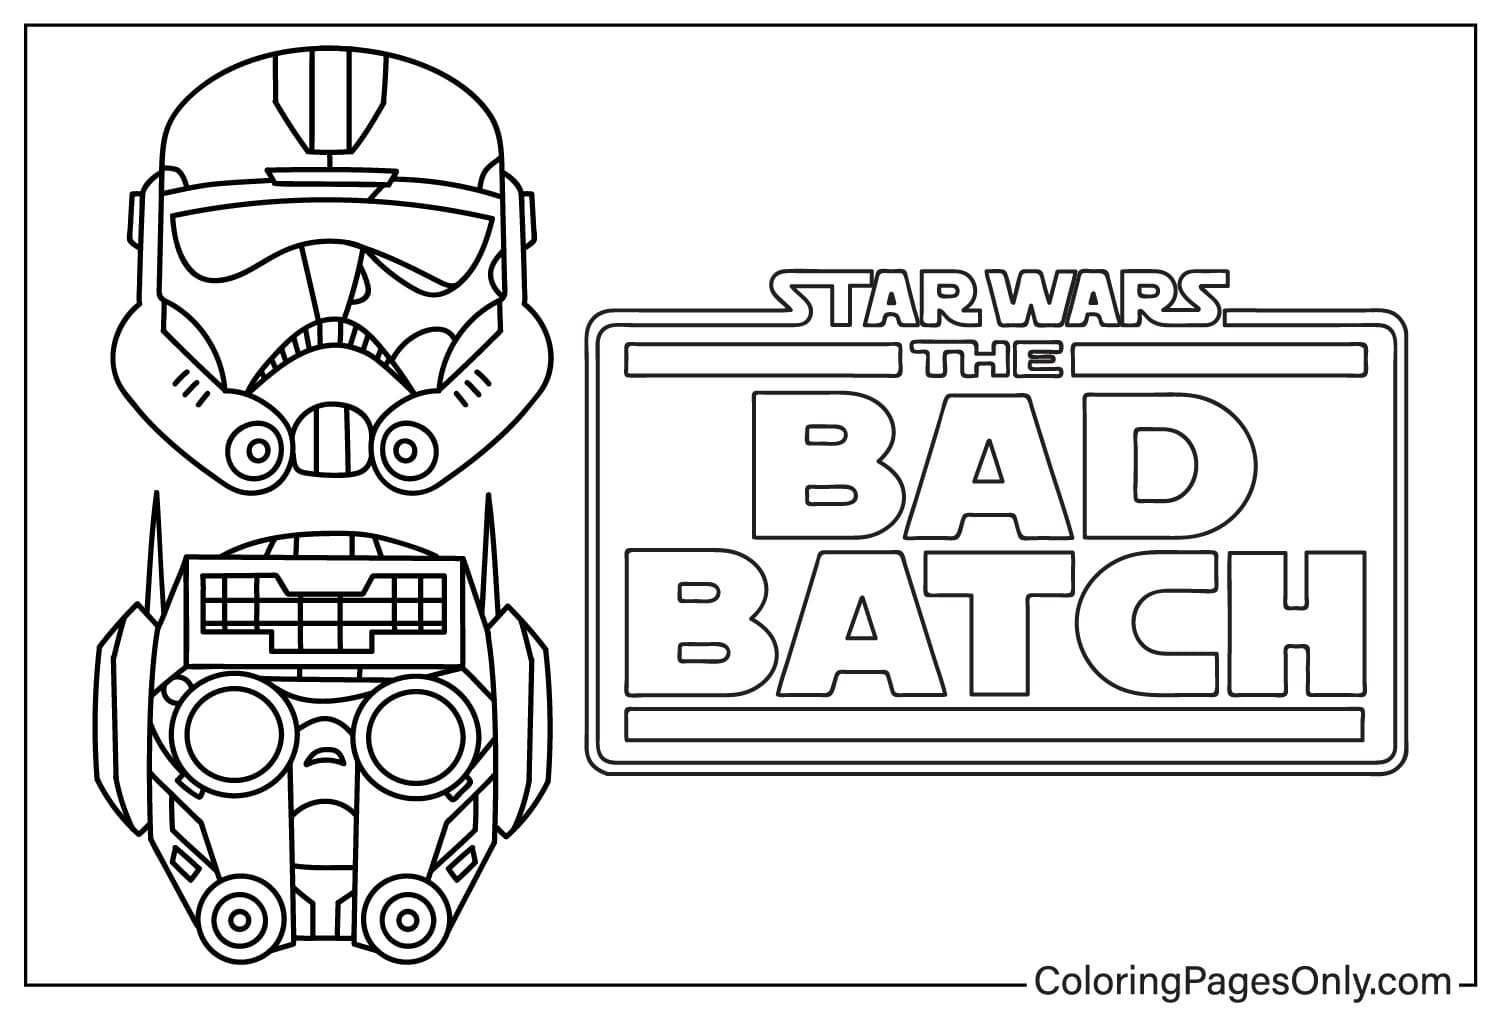 Desenhando a máscara da temporada de Star Wars The Bad Batch da 3ª temporada de Star Wars The Bad Batch